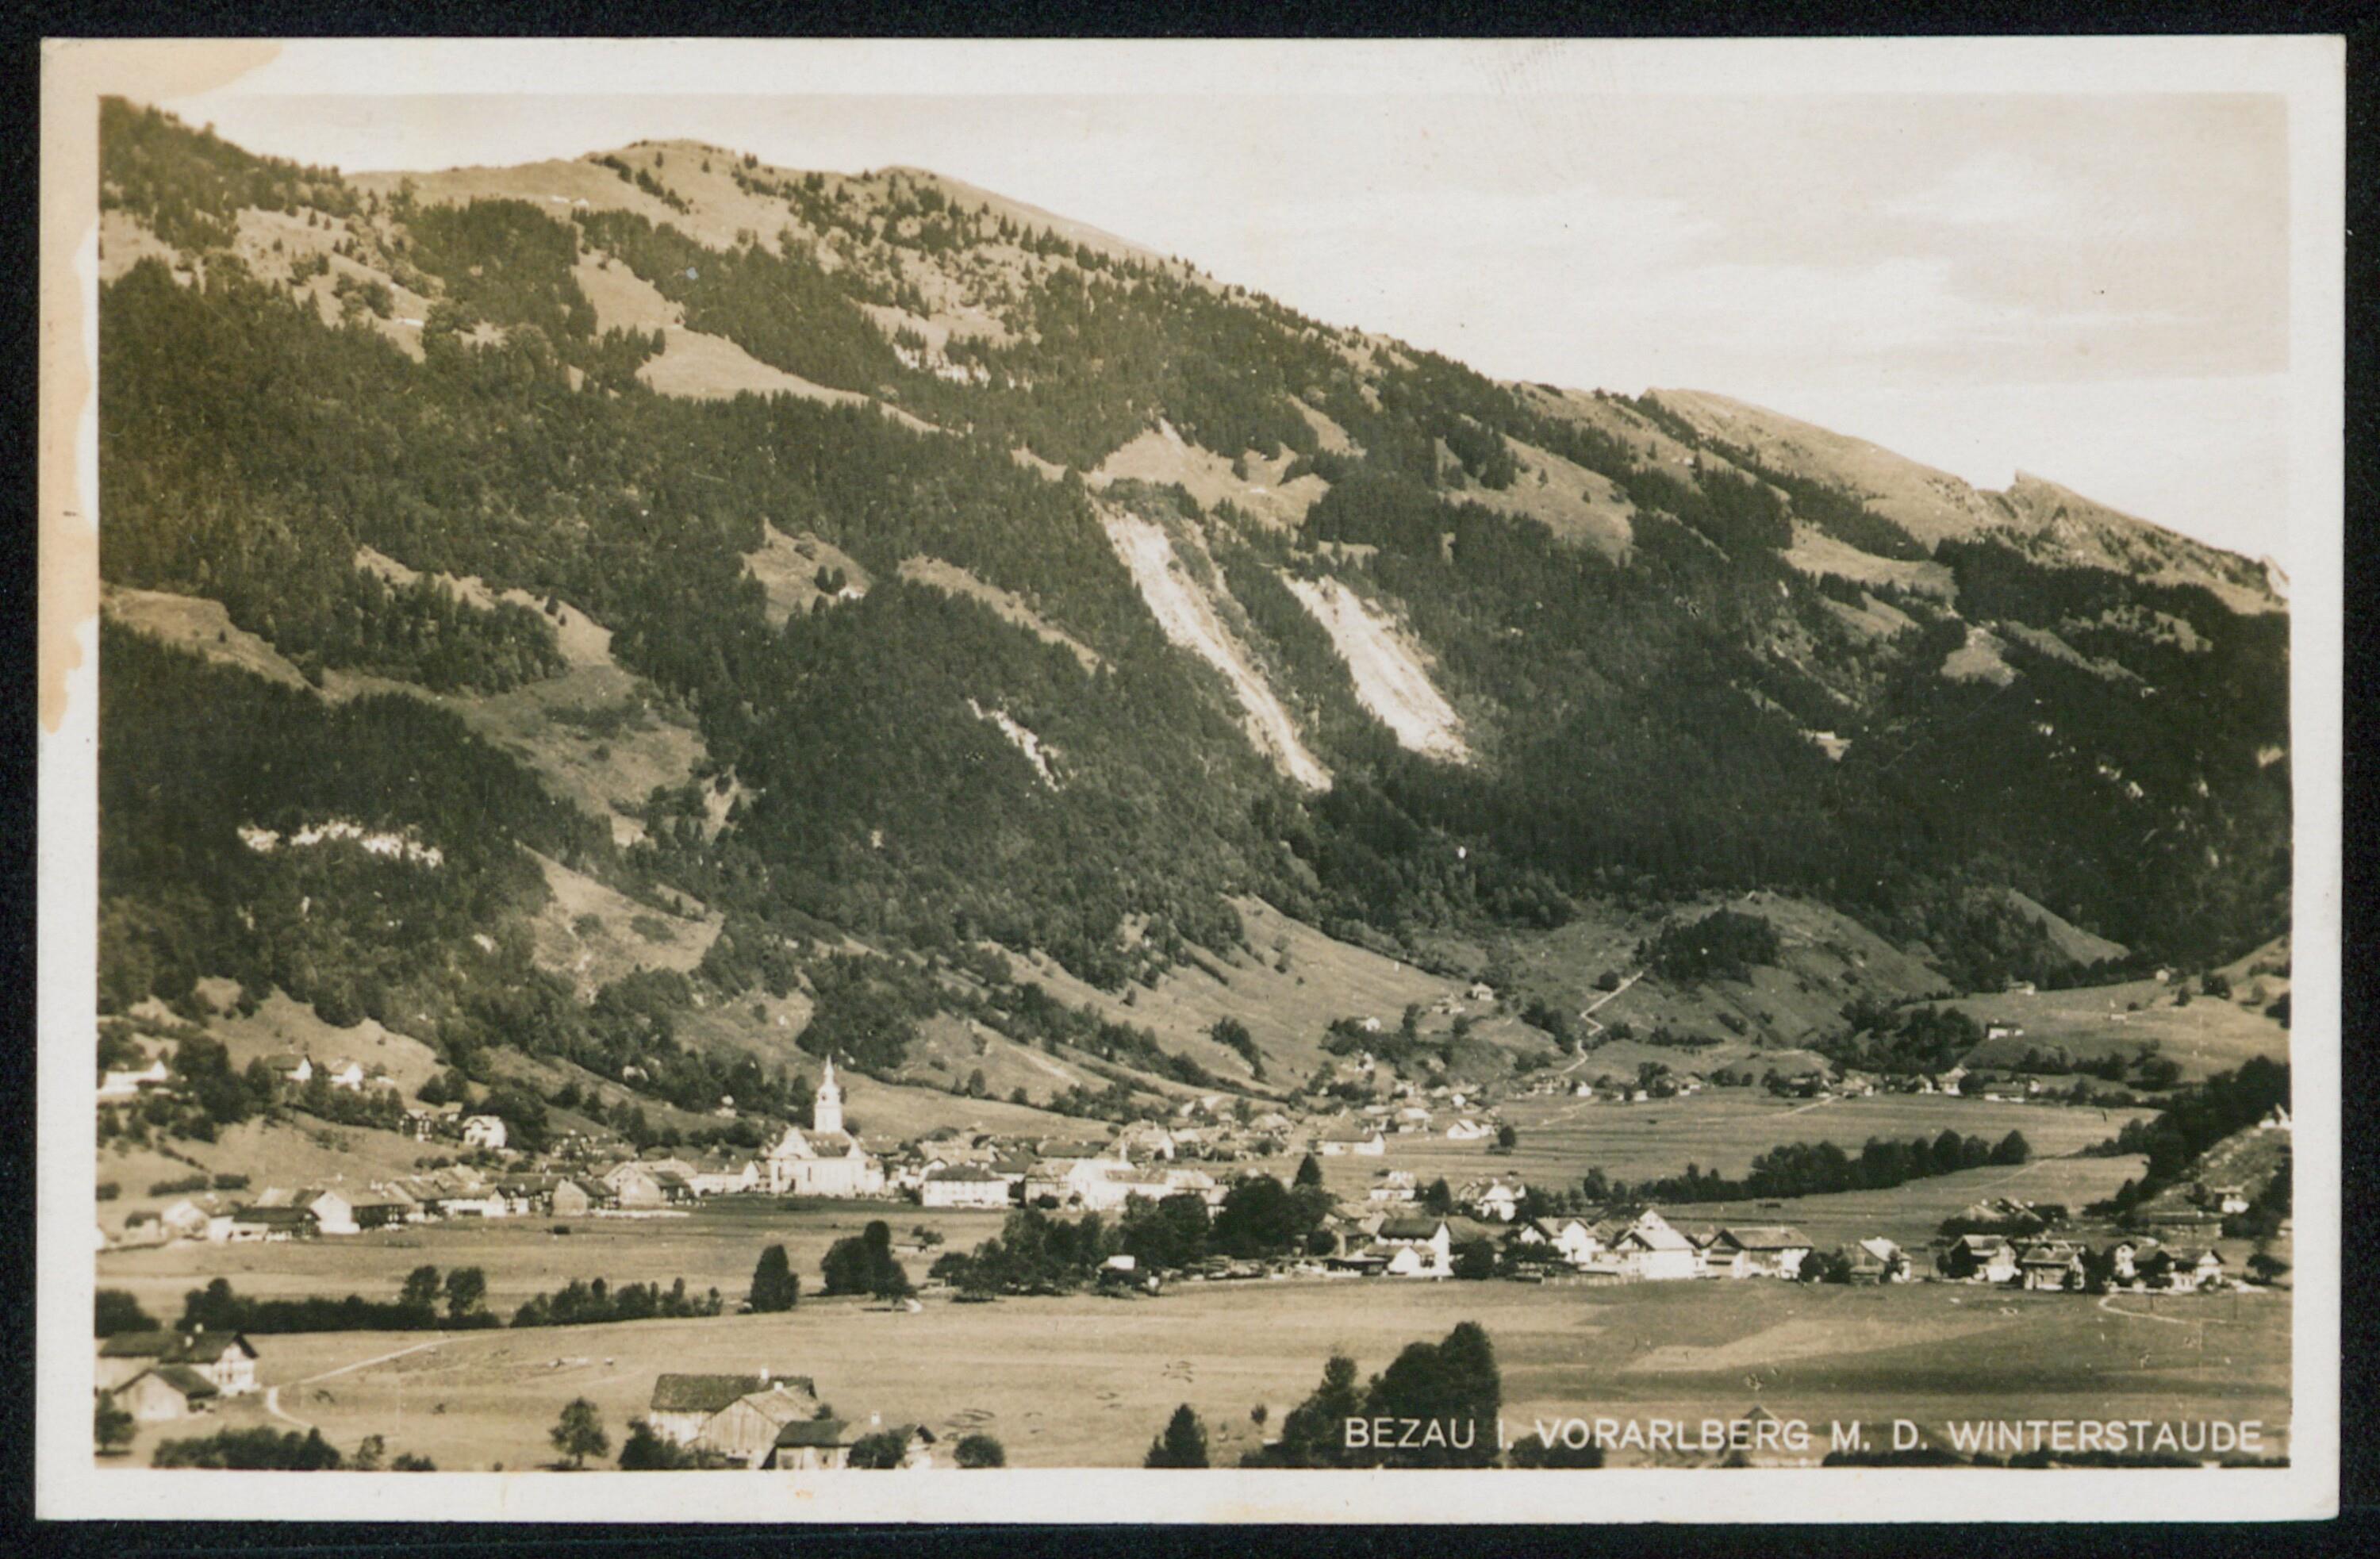 Bezau i. Vorarlberg m. d. Winterstaude></div>


    <hr>
    <div class=